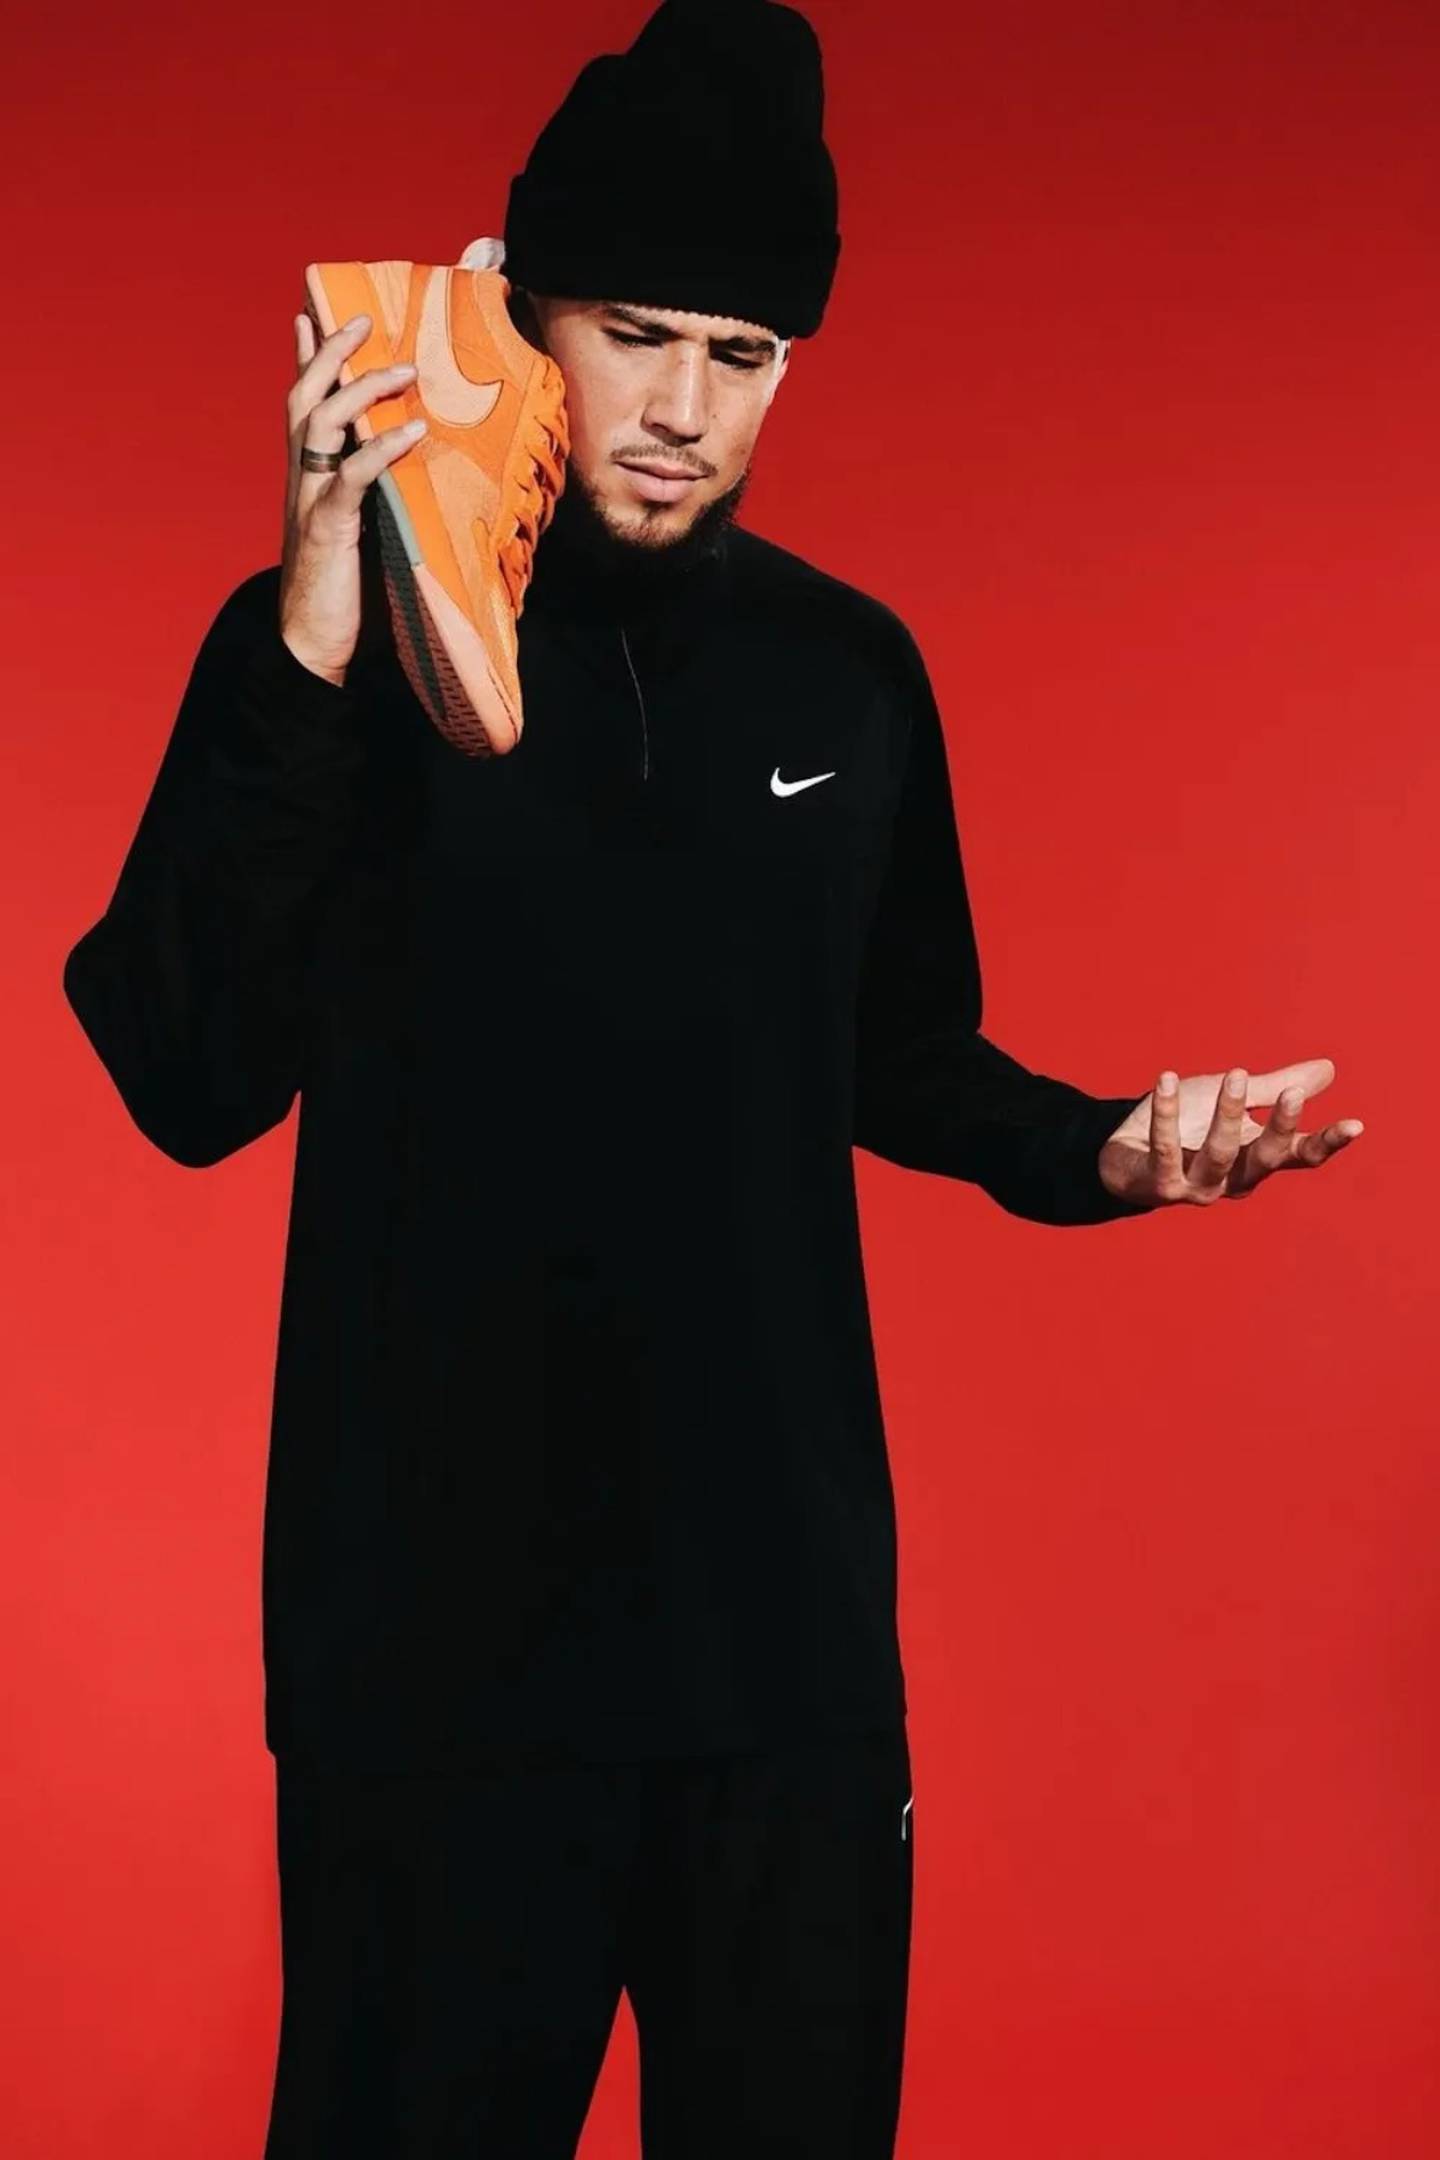 Devin Booker holding his signature Nike shoe